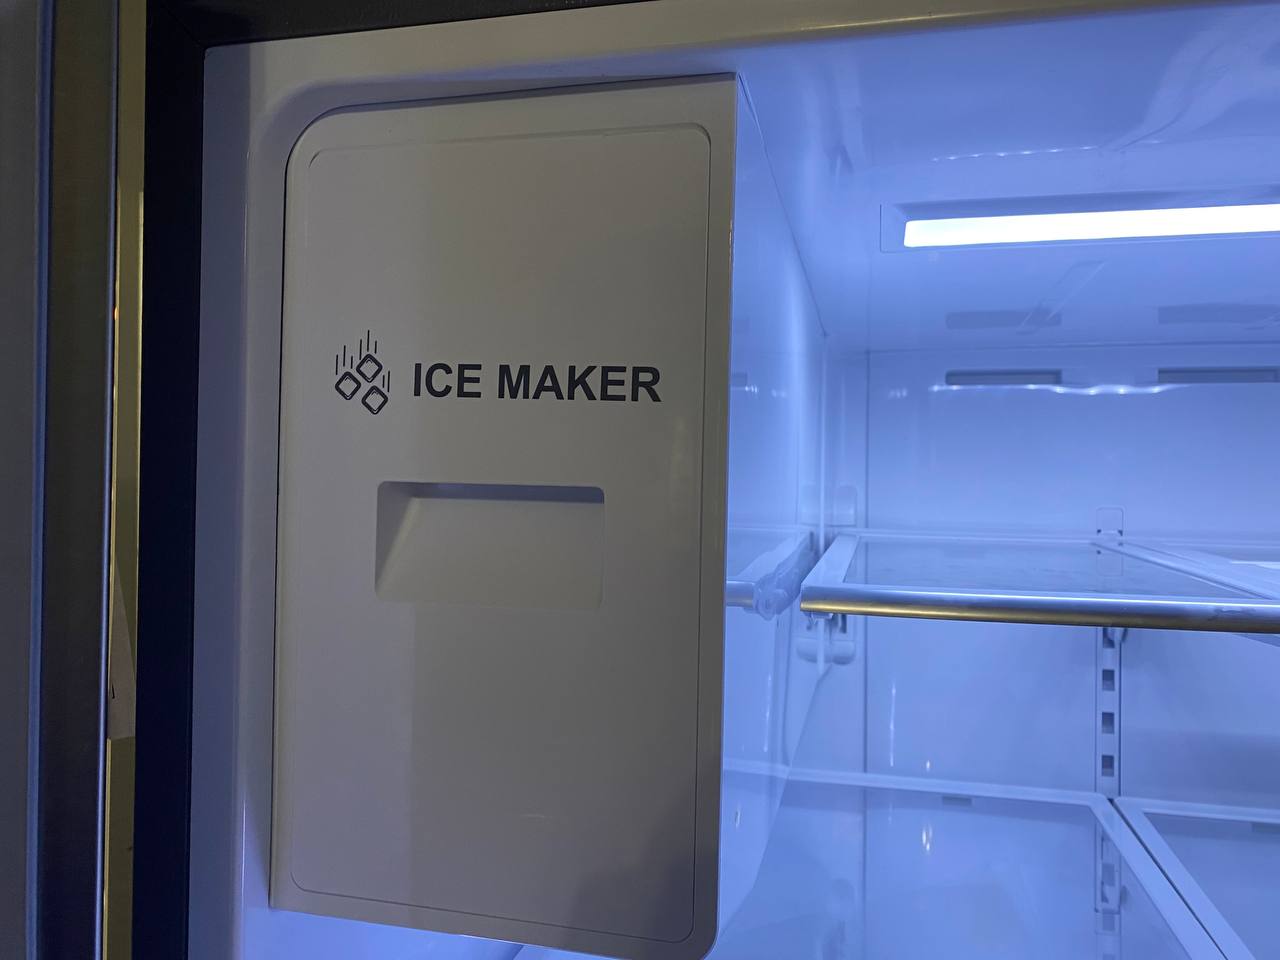 Ice maker in refrigerator